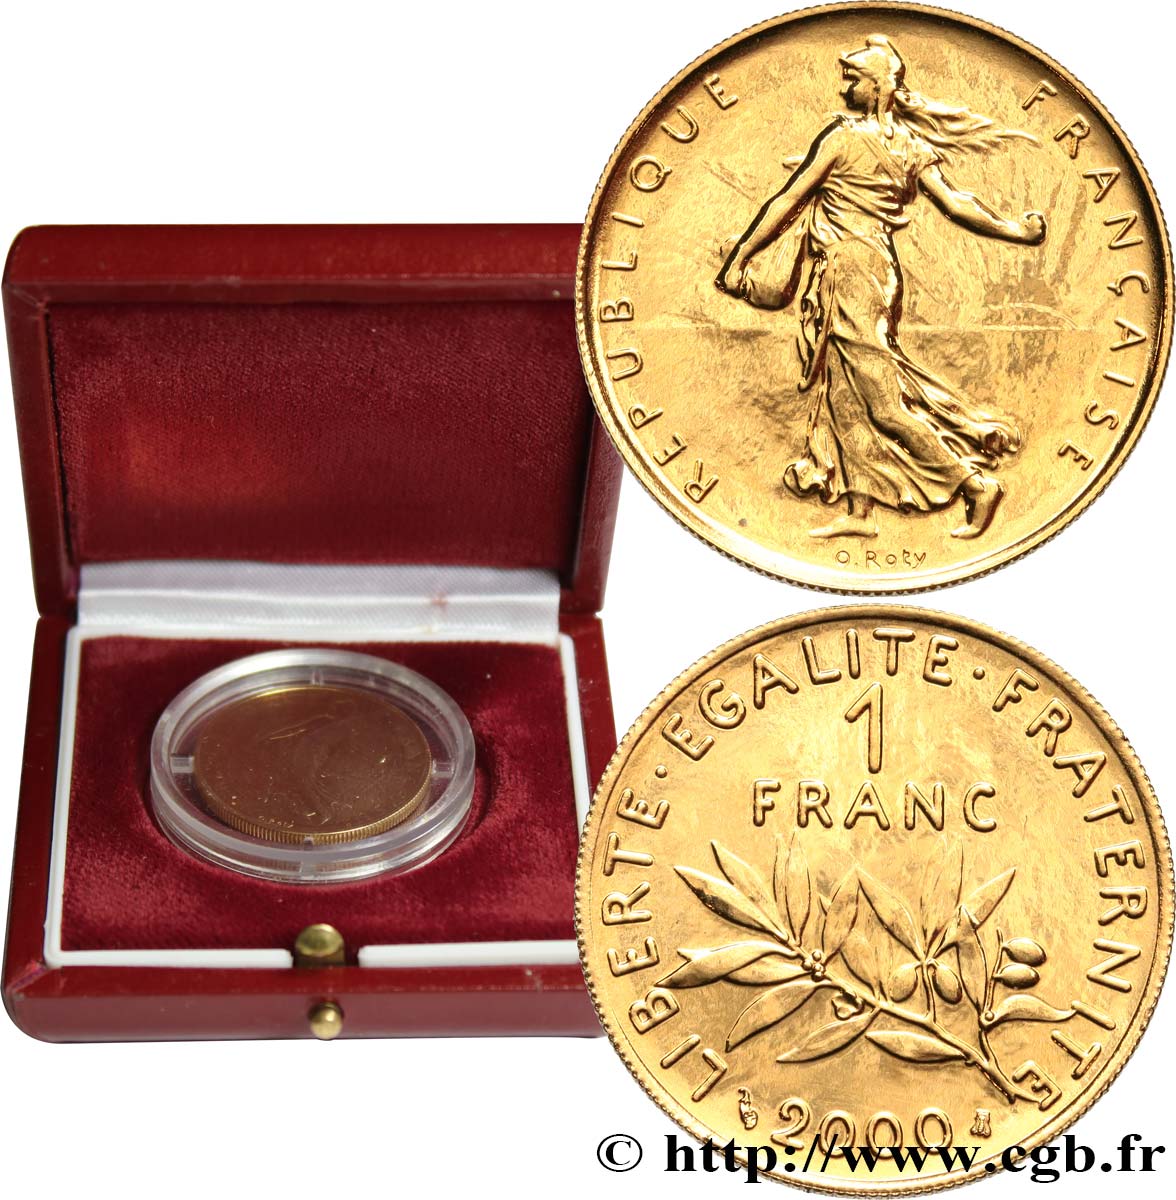 1 franc Semeuse Or, BU (Brillant Universel) 2000 Pessac F5.1007 1 ST 